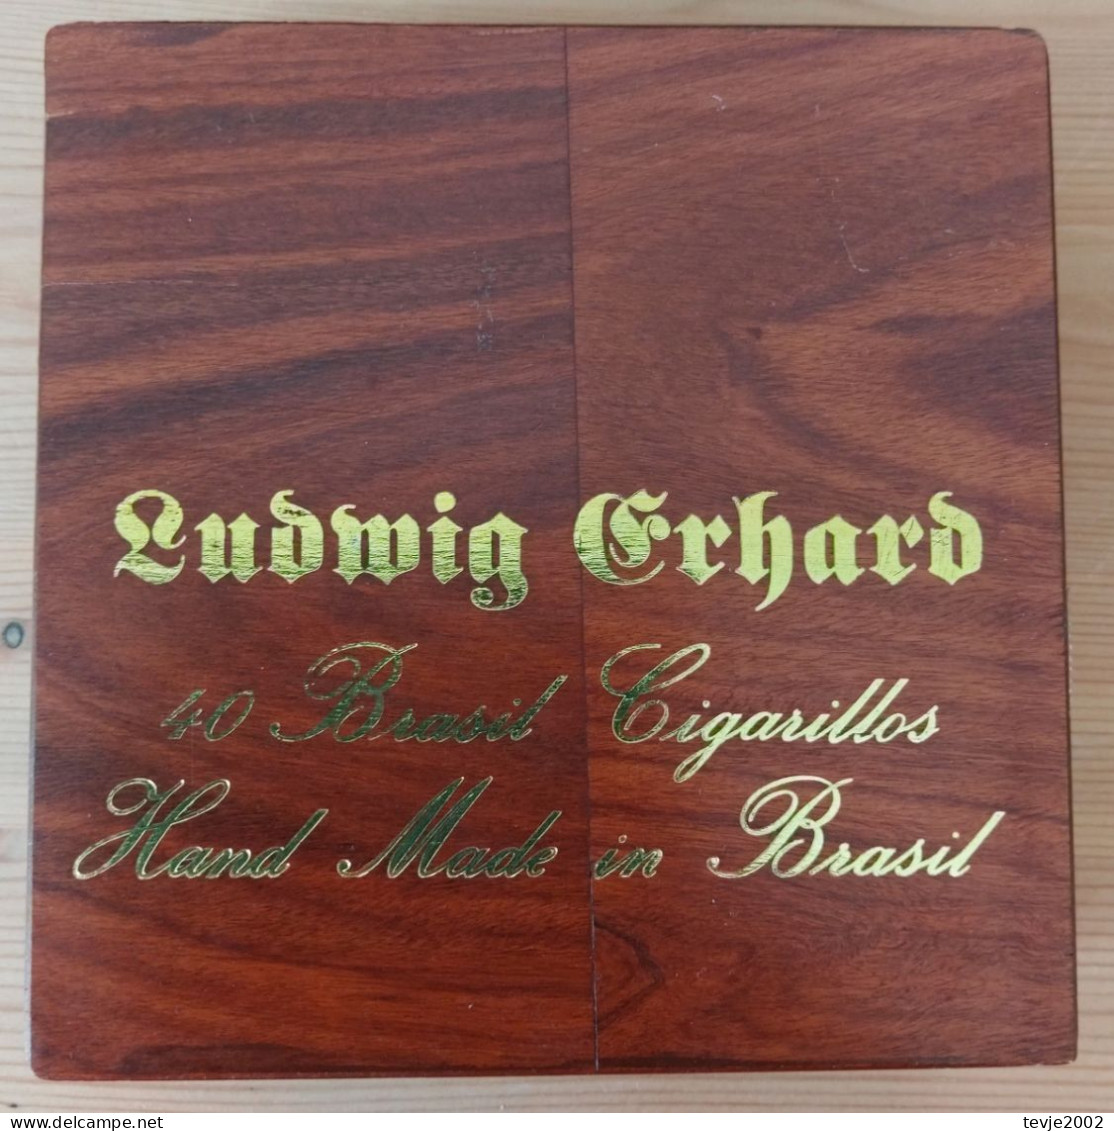 Zigarrenkiste - Ludwig Erhard - Hand Made In Brasil - Suerdieck - Bodegas Para Puros (vacios)